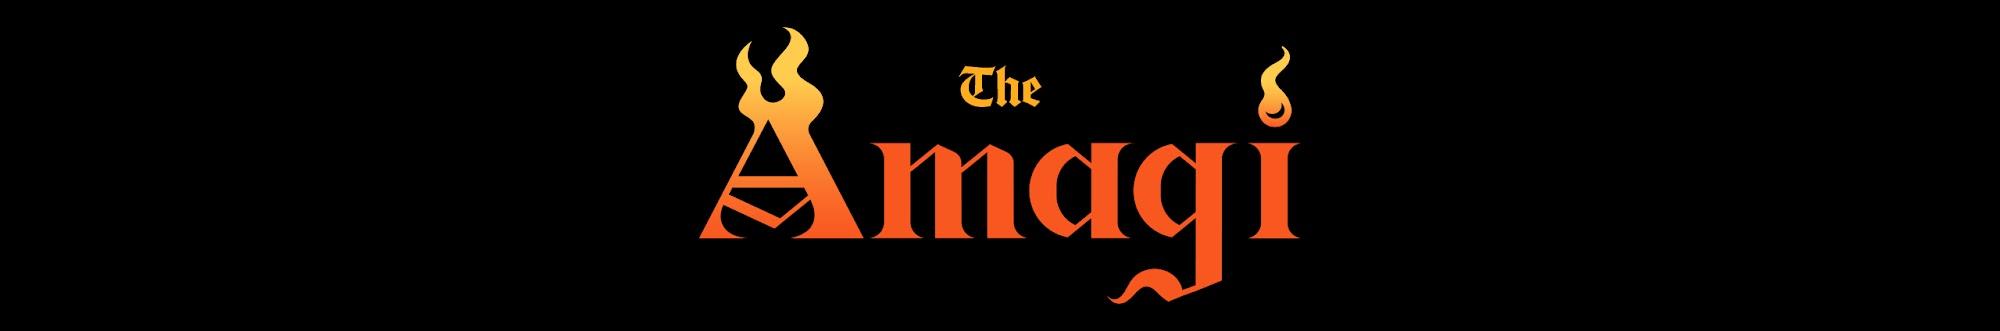 The Amagi Hindi